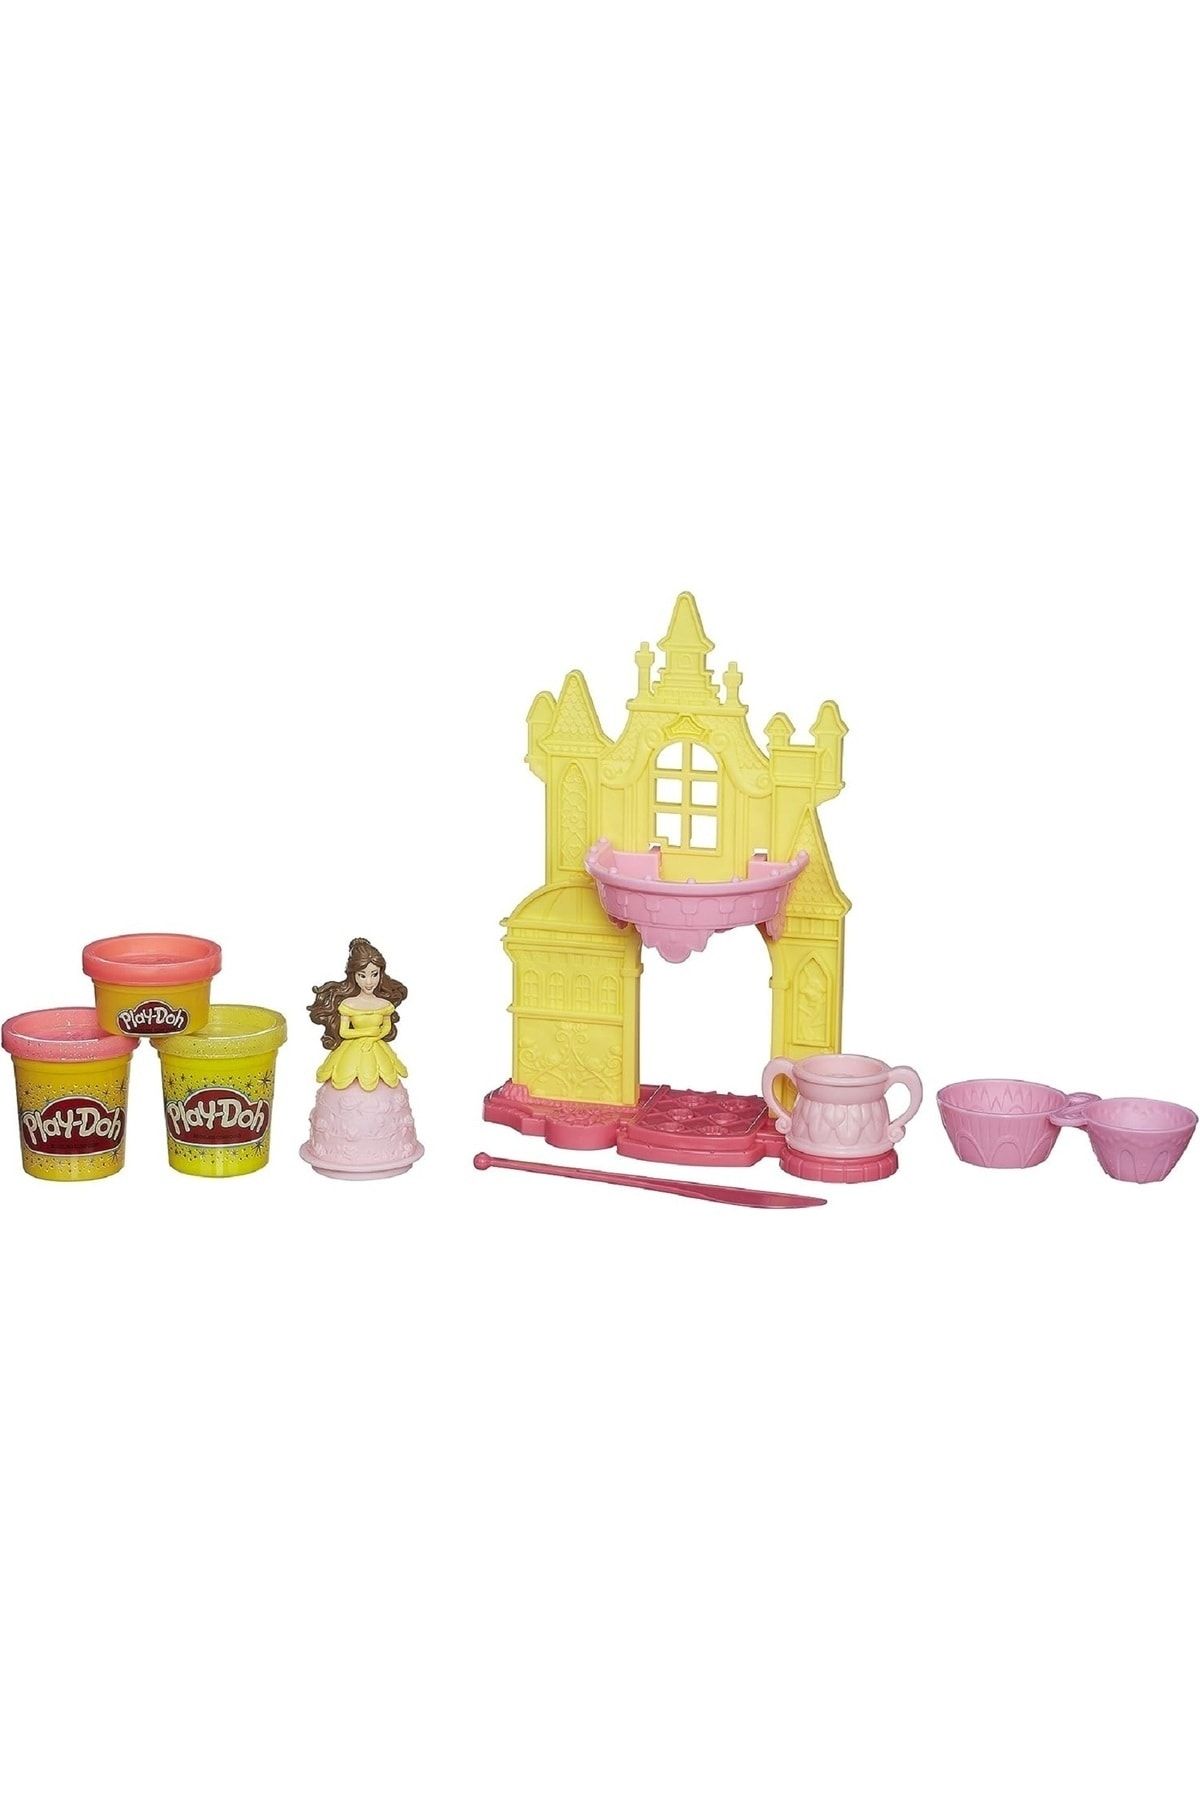 Hasbro Play-Doh Disney Princess Belles Blooming Castle